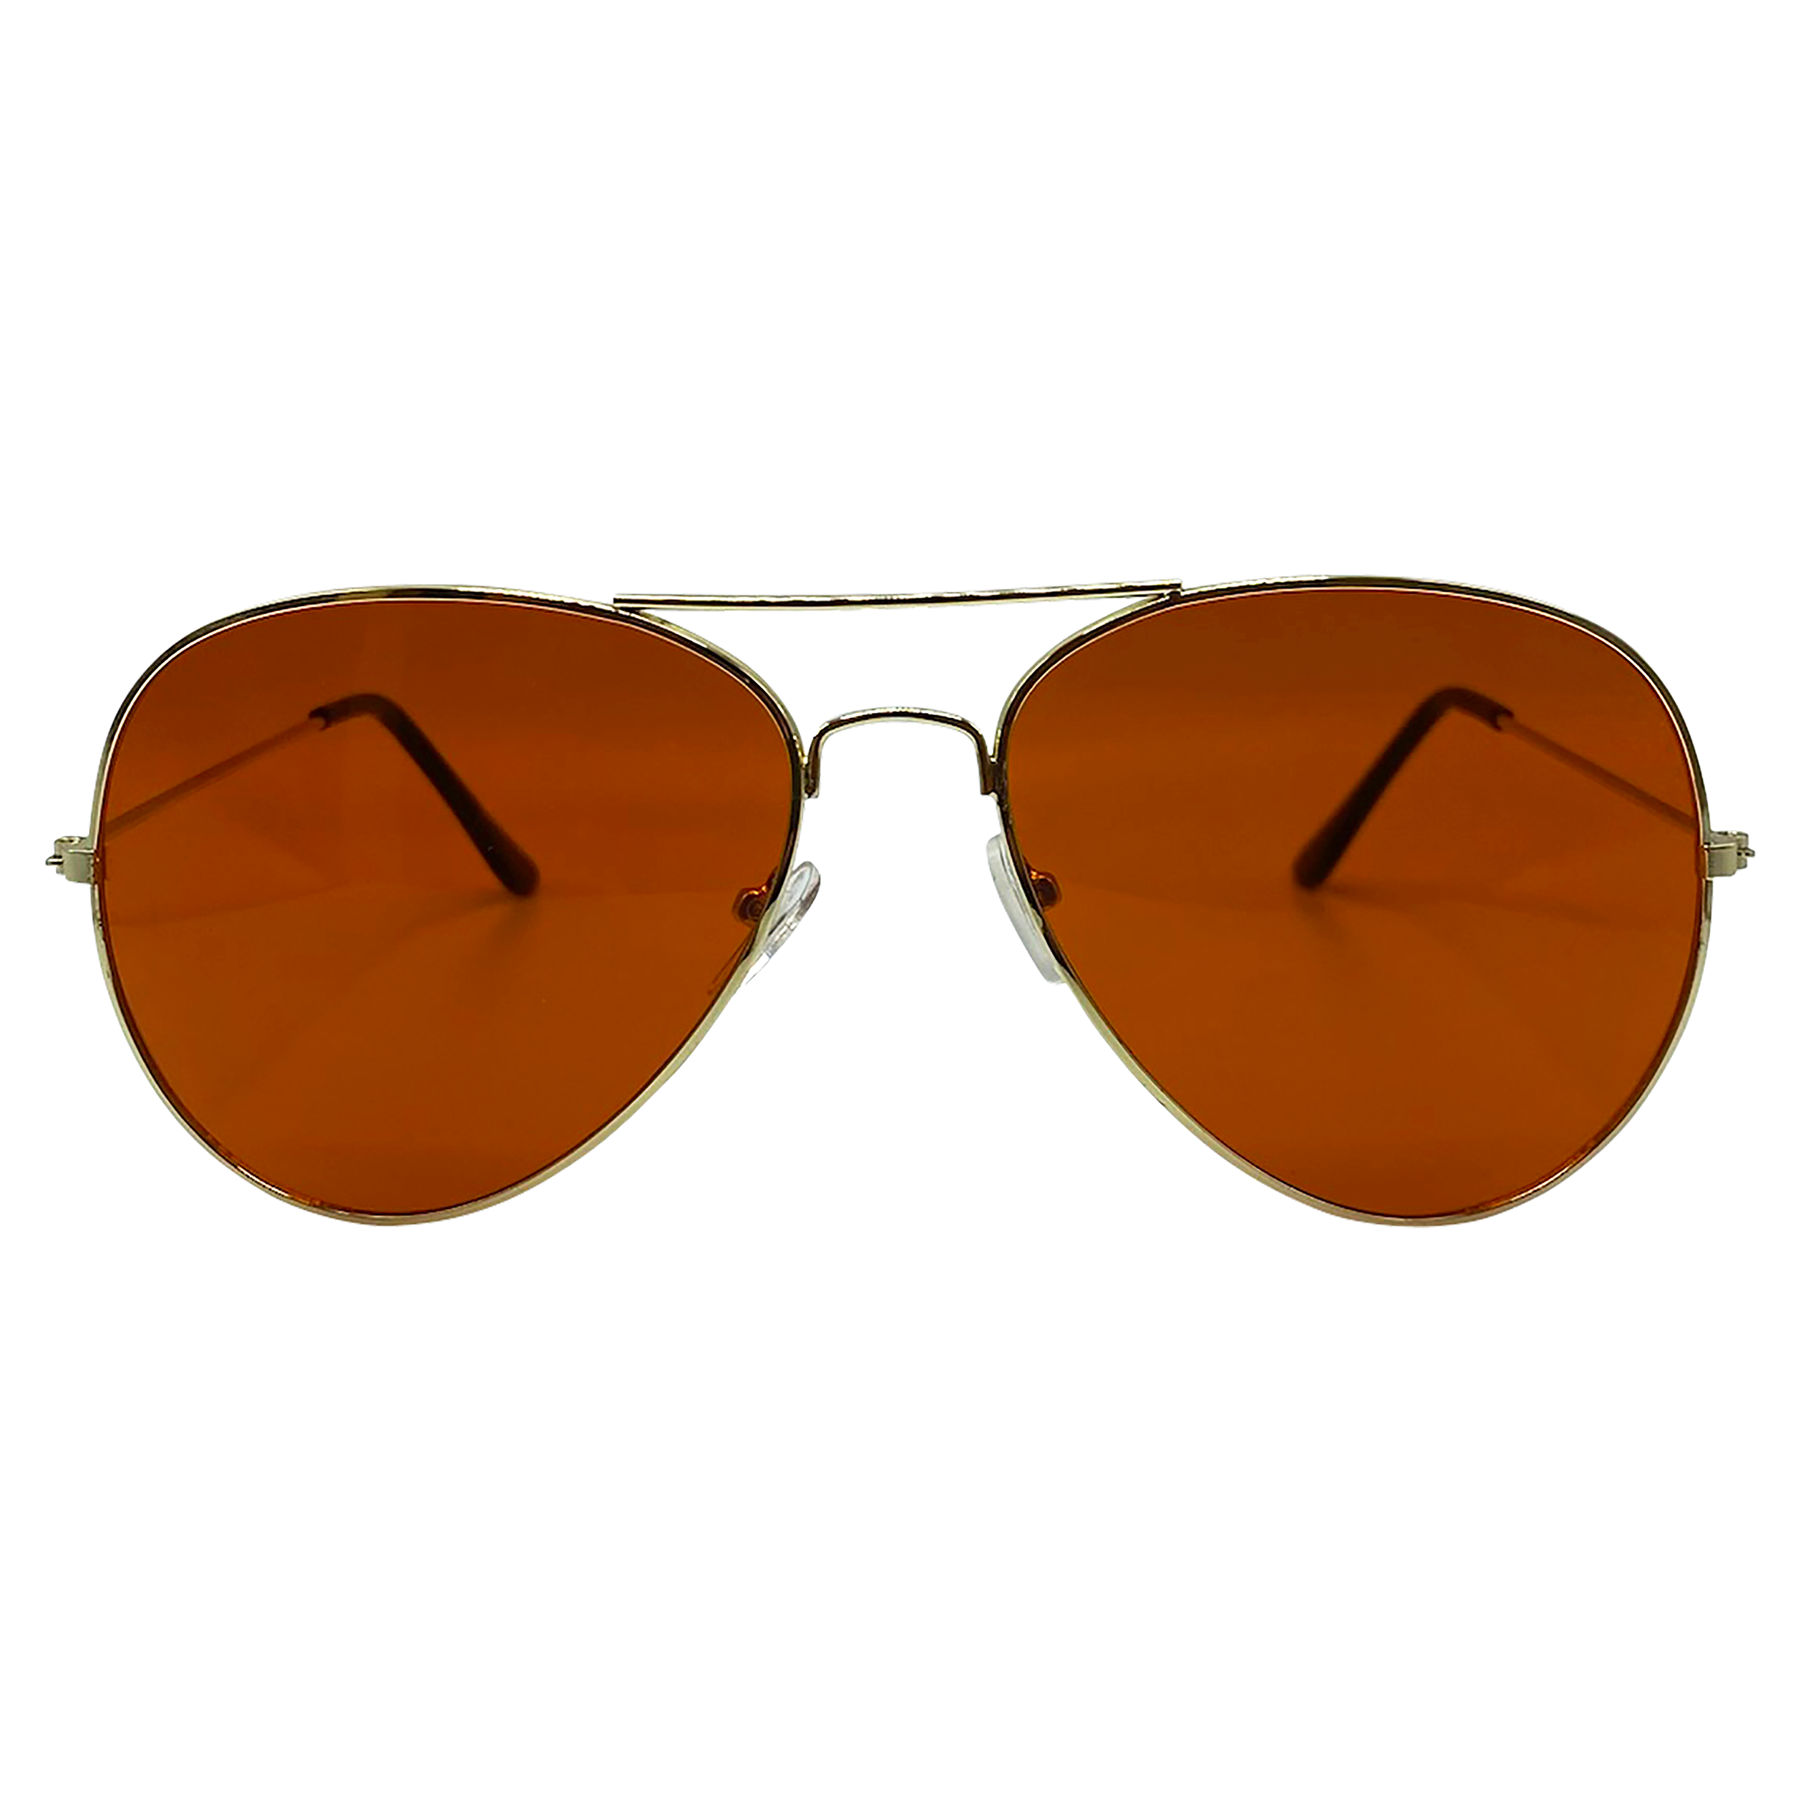 FILTER Gold Aviator Sunglasses | Blue-Blocker | Day Driving